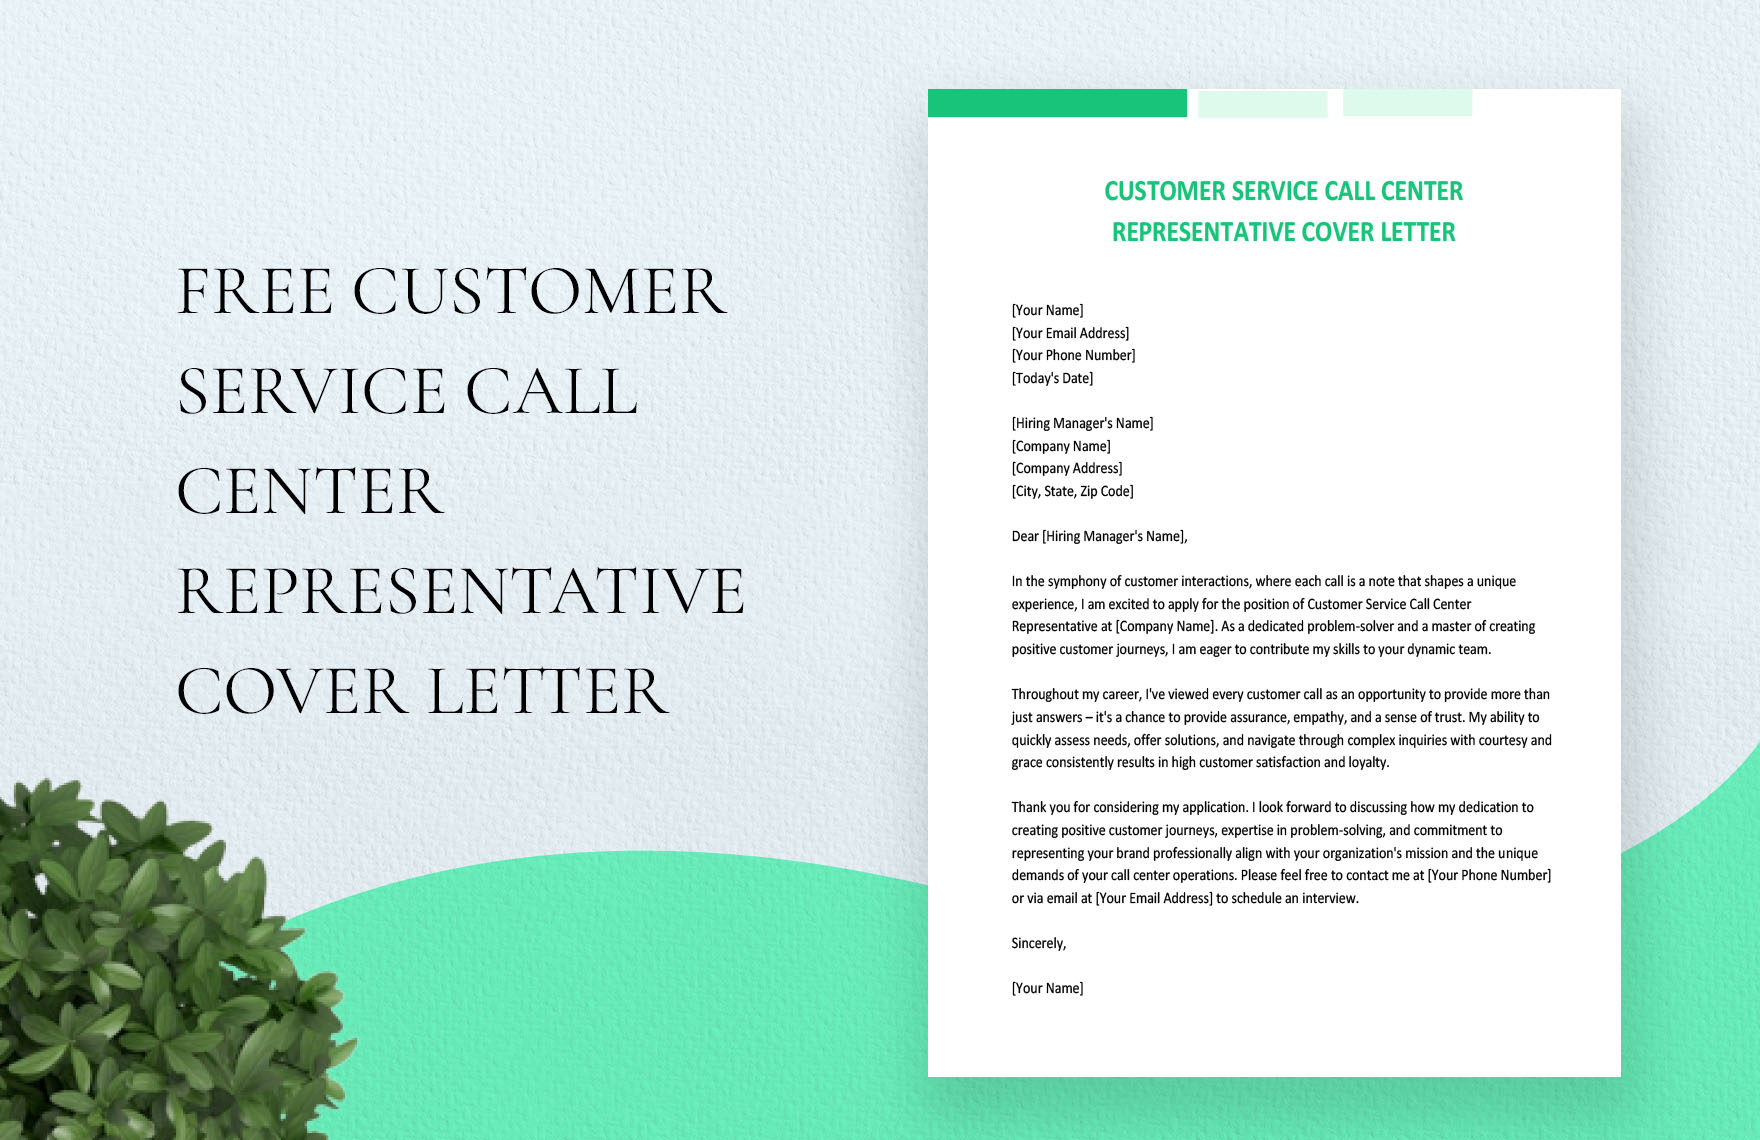 Customer Service Call Center Representative Cover Letter in Word, Google Docs